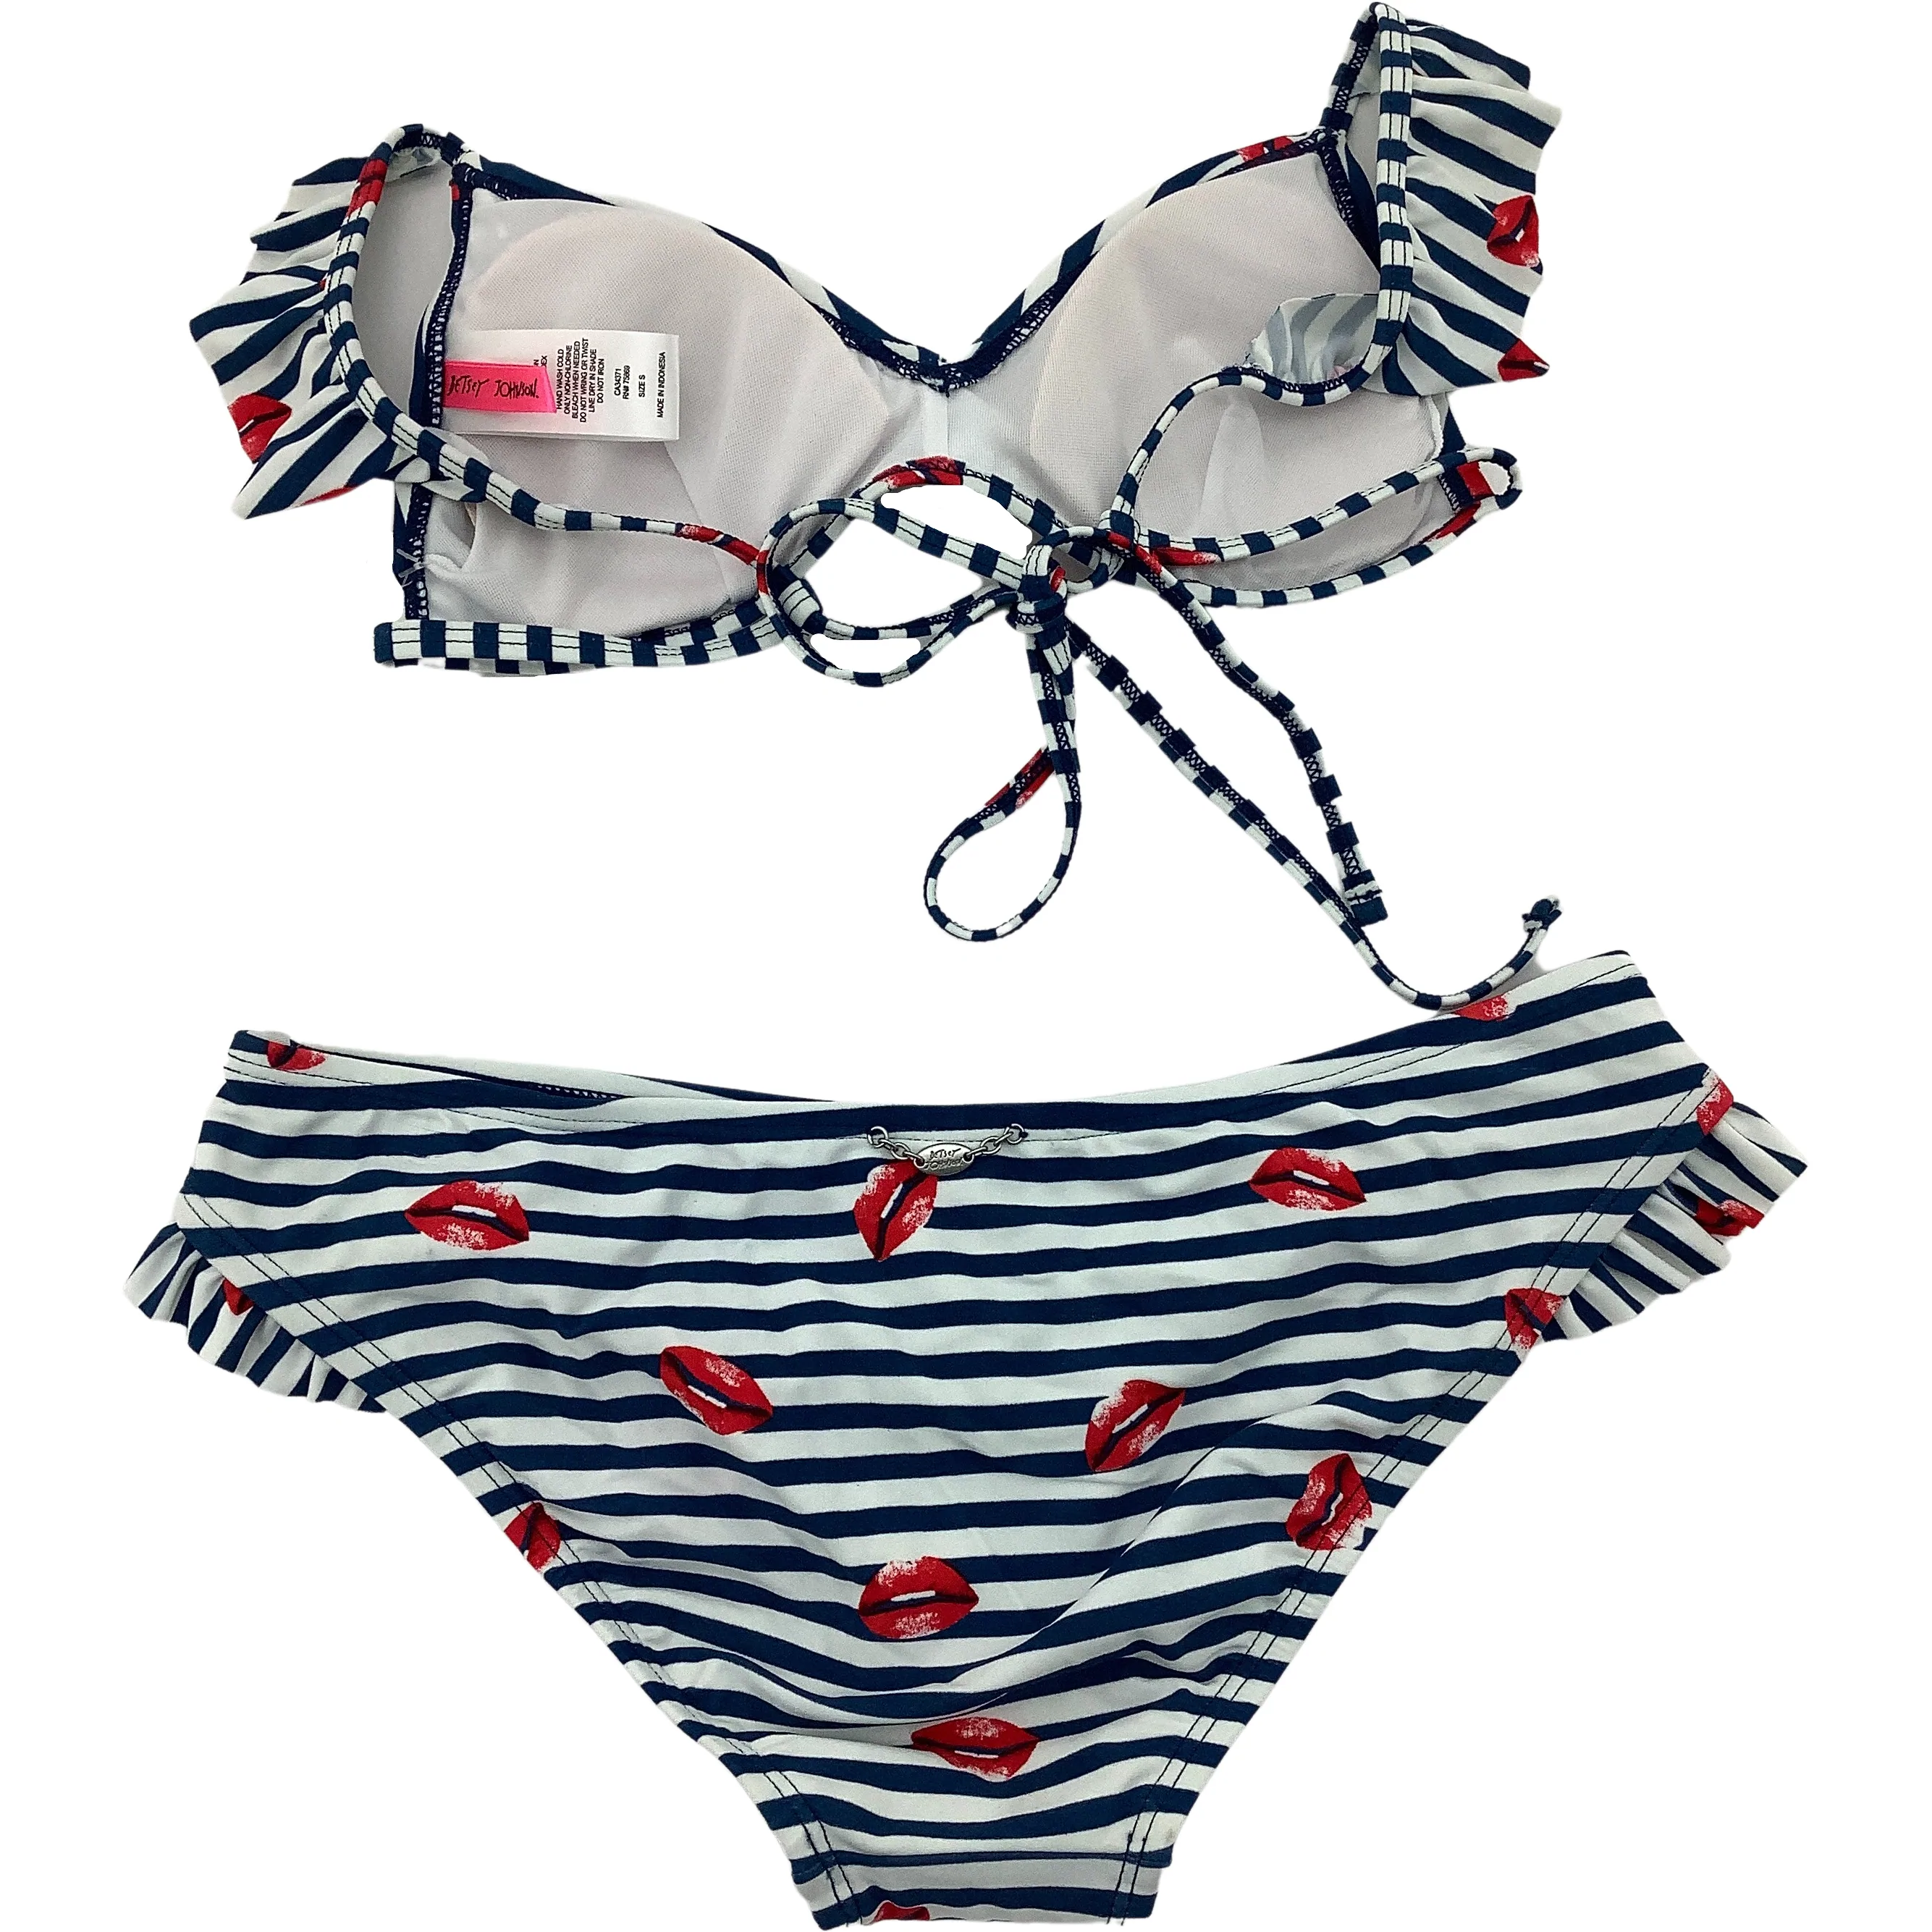 Betsey Johnson Women's Bathing Suit / Bikini Style Swim Suit / Size S / White and Blue